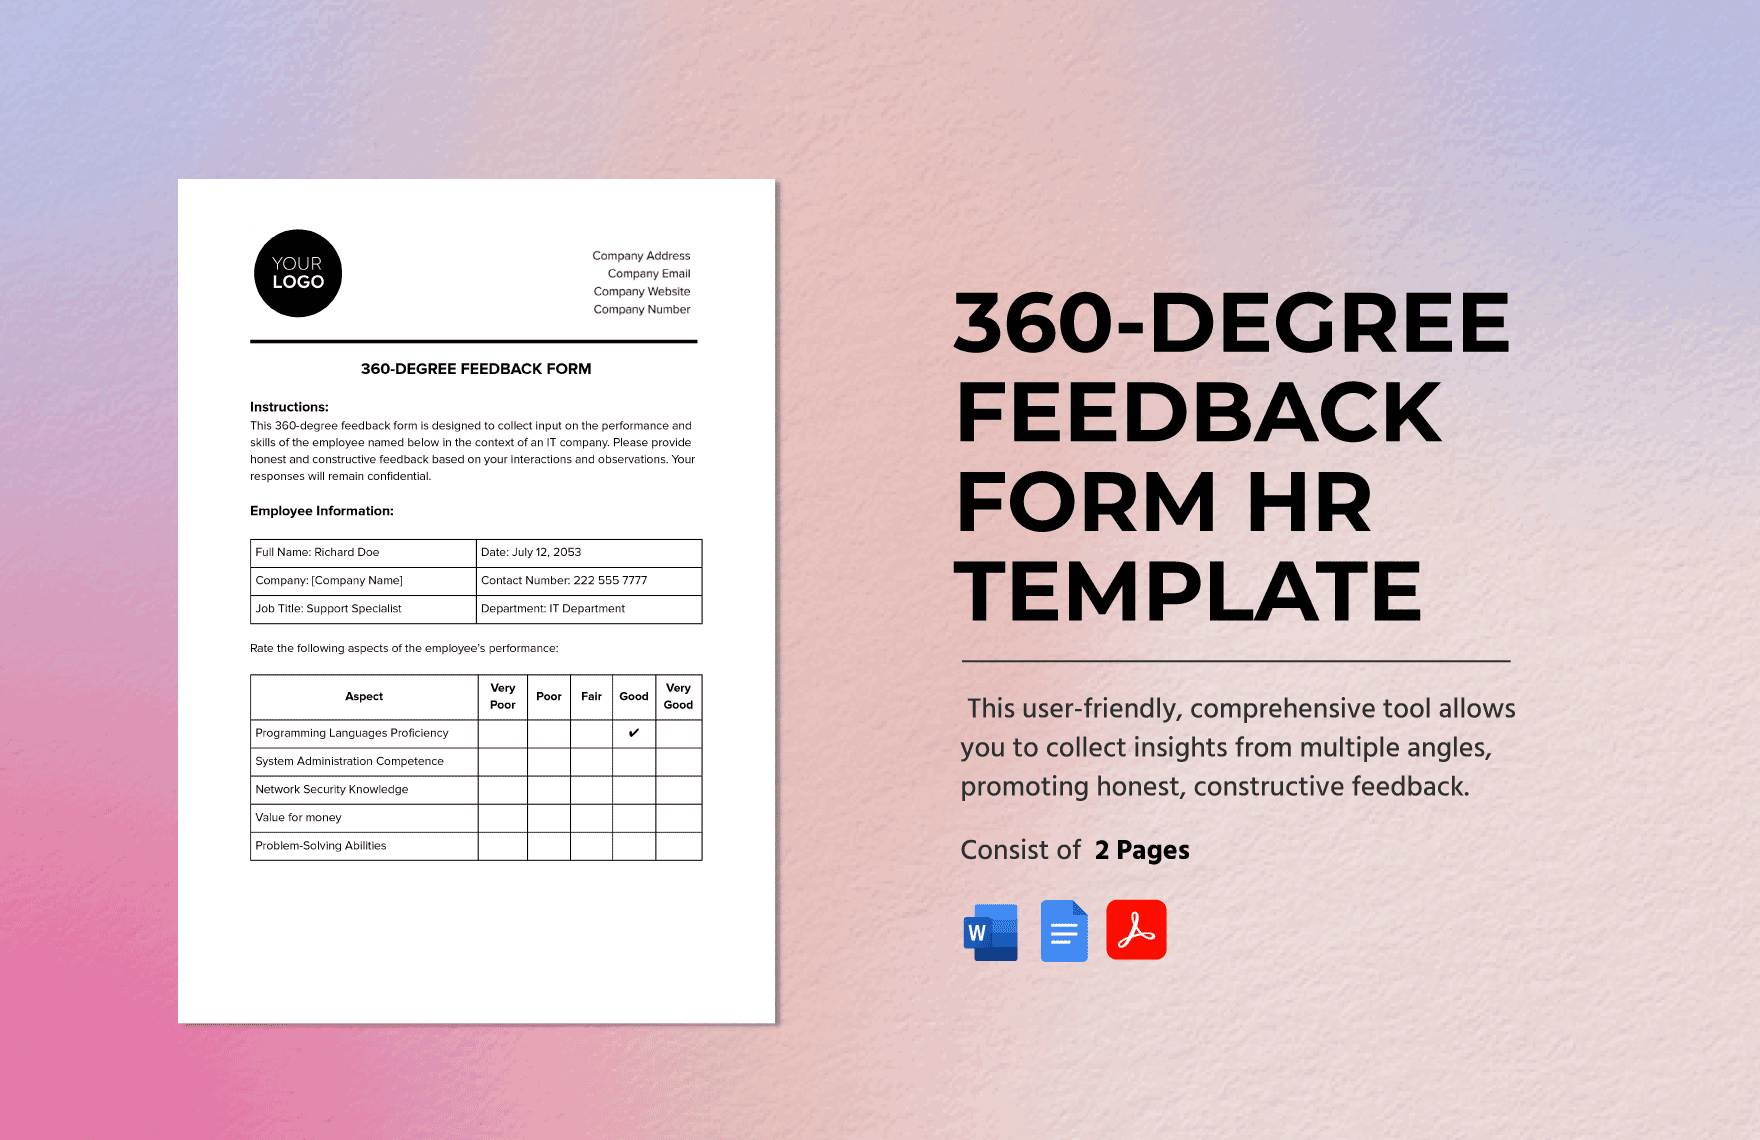 360-Degree Feedback Form HR Template